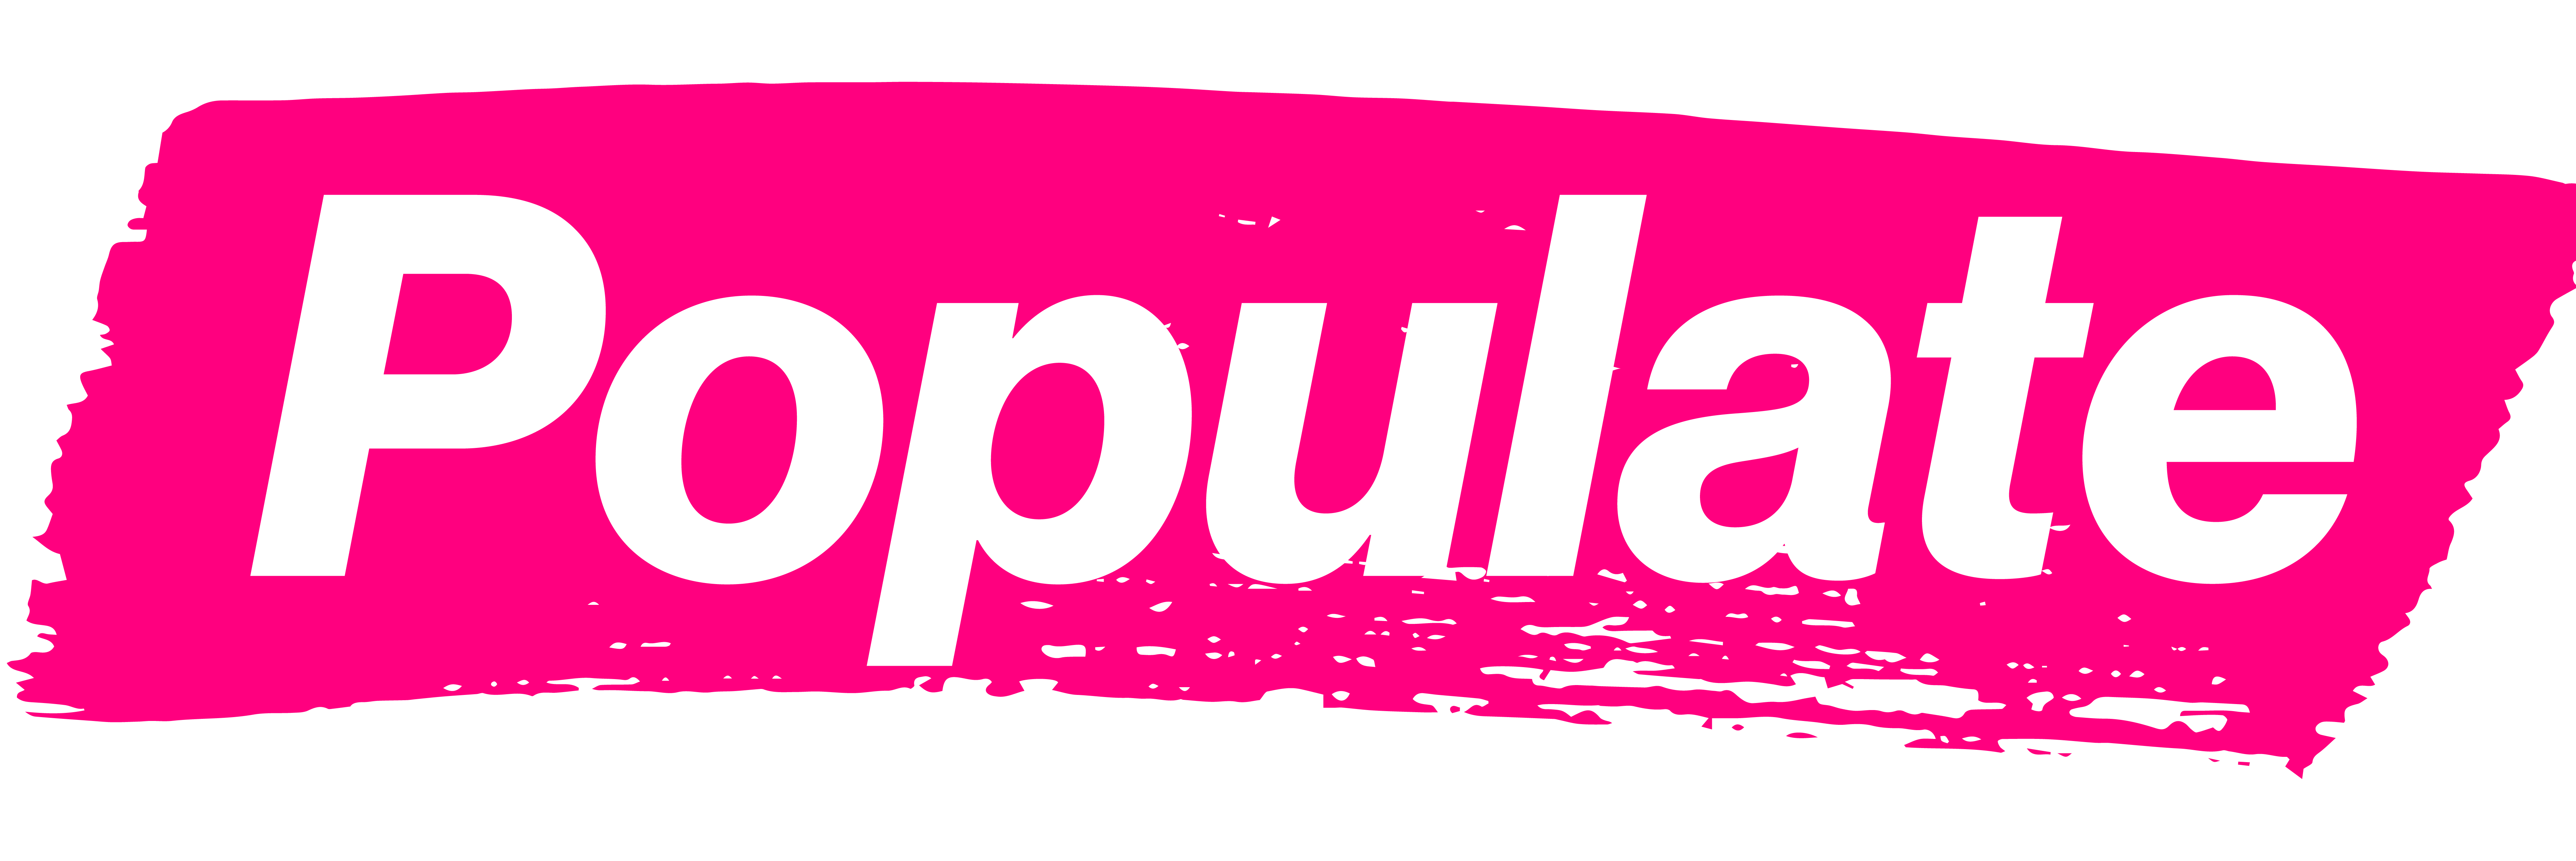 Populate